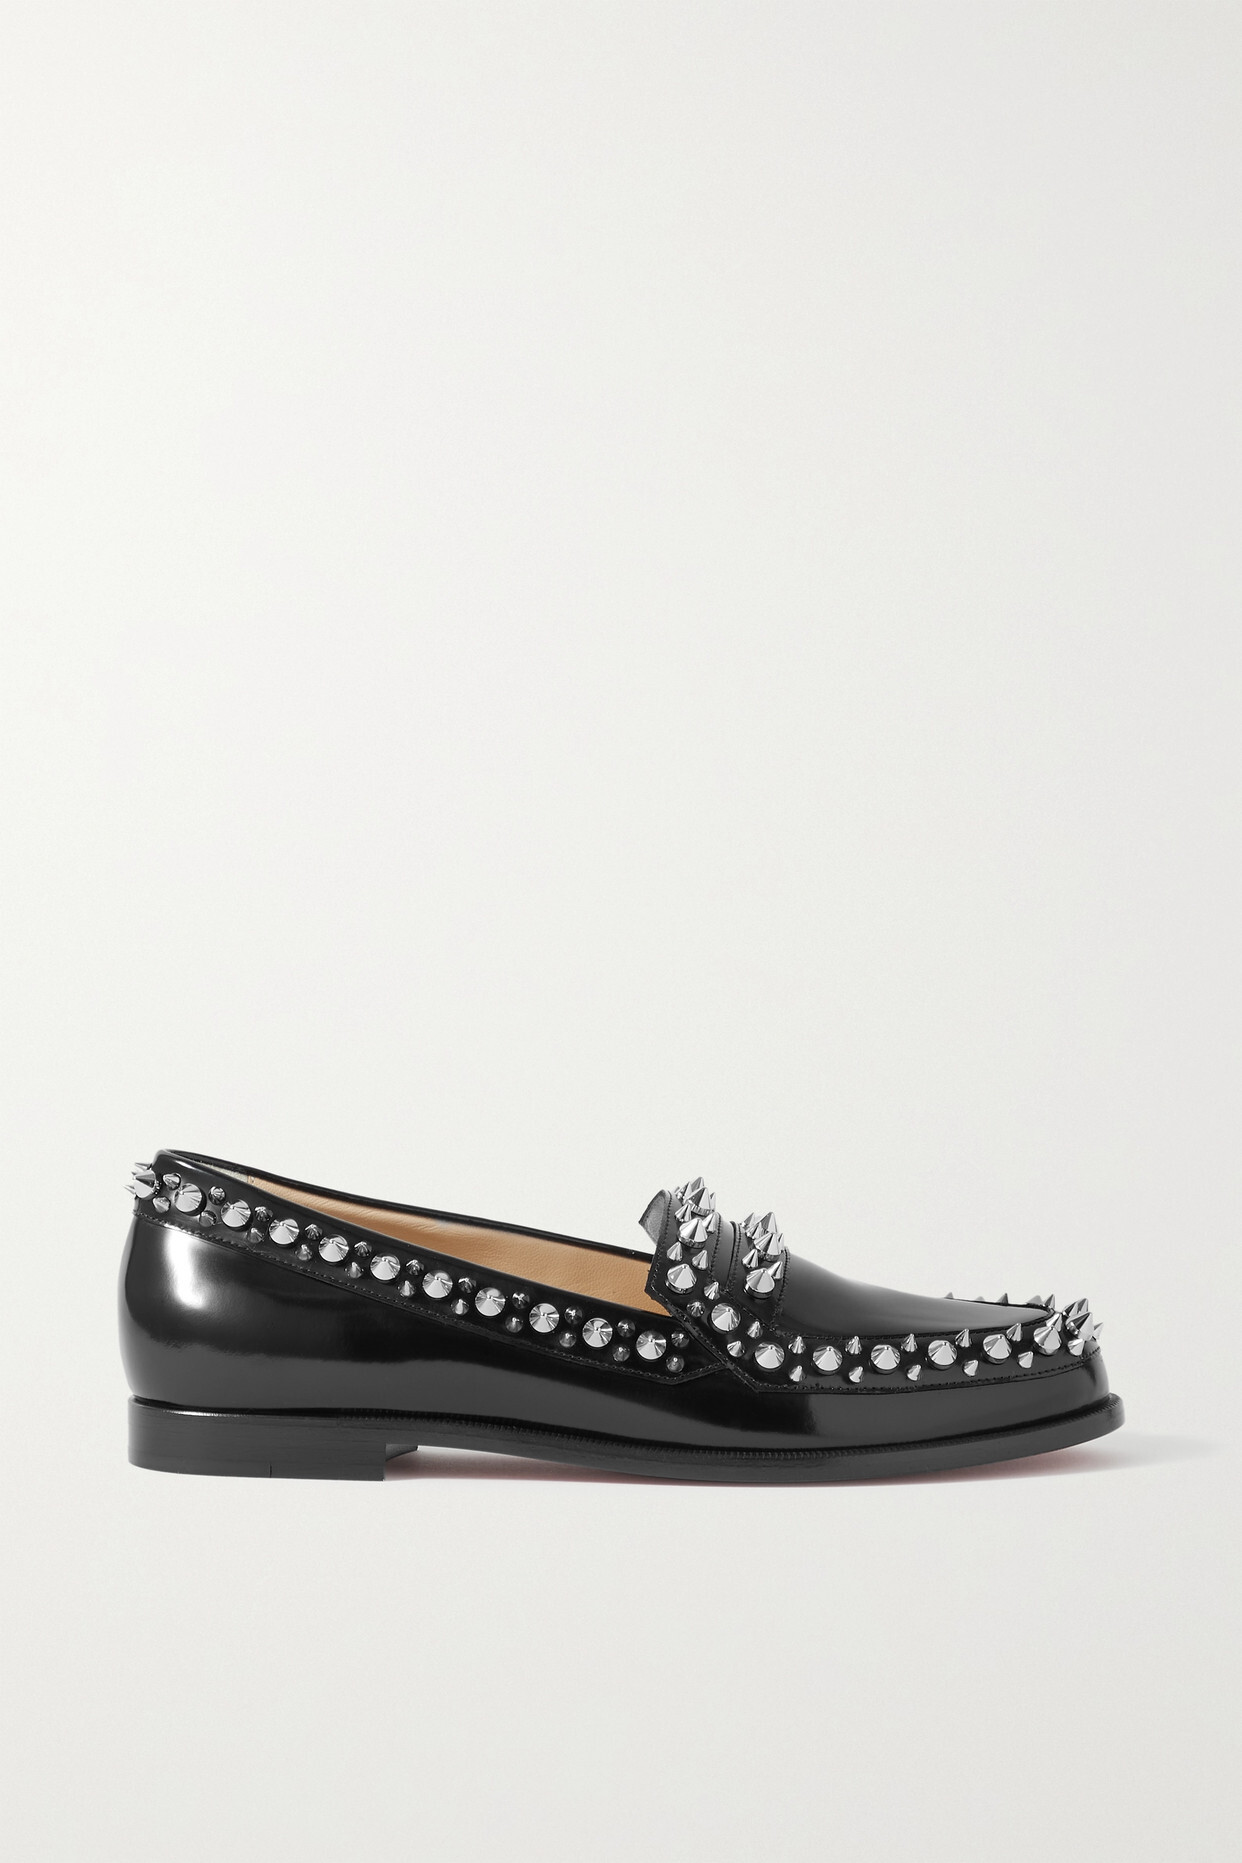 Christian Louboutin - Mattia Spikes Studded Patent-leather Loafers - Black